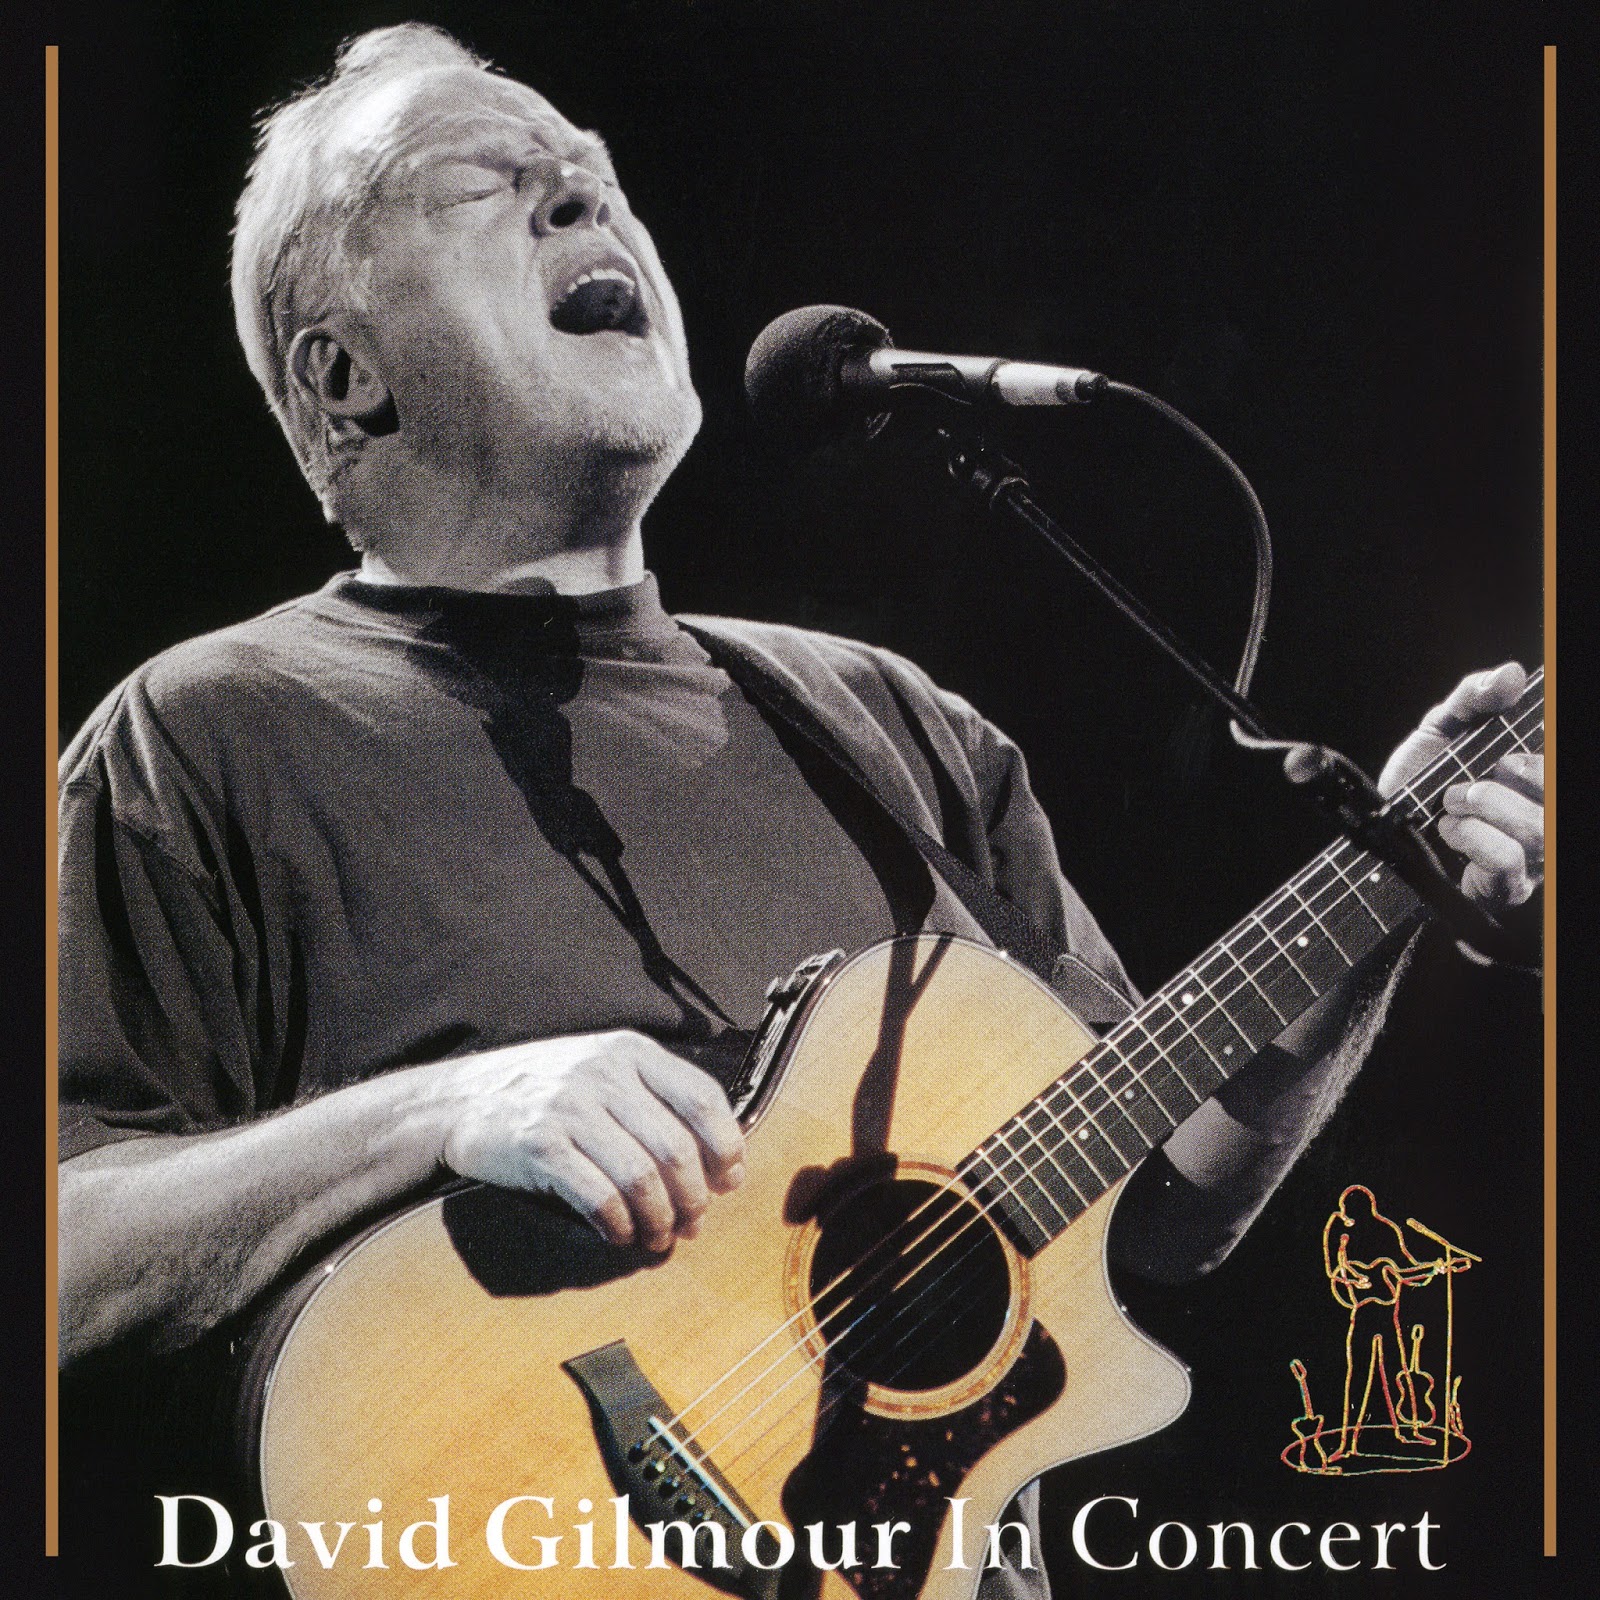 David gilmour david gilmour full album